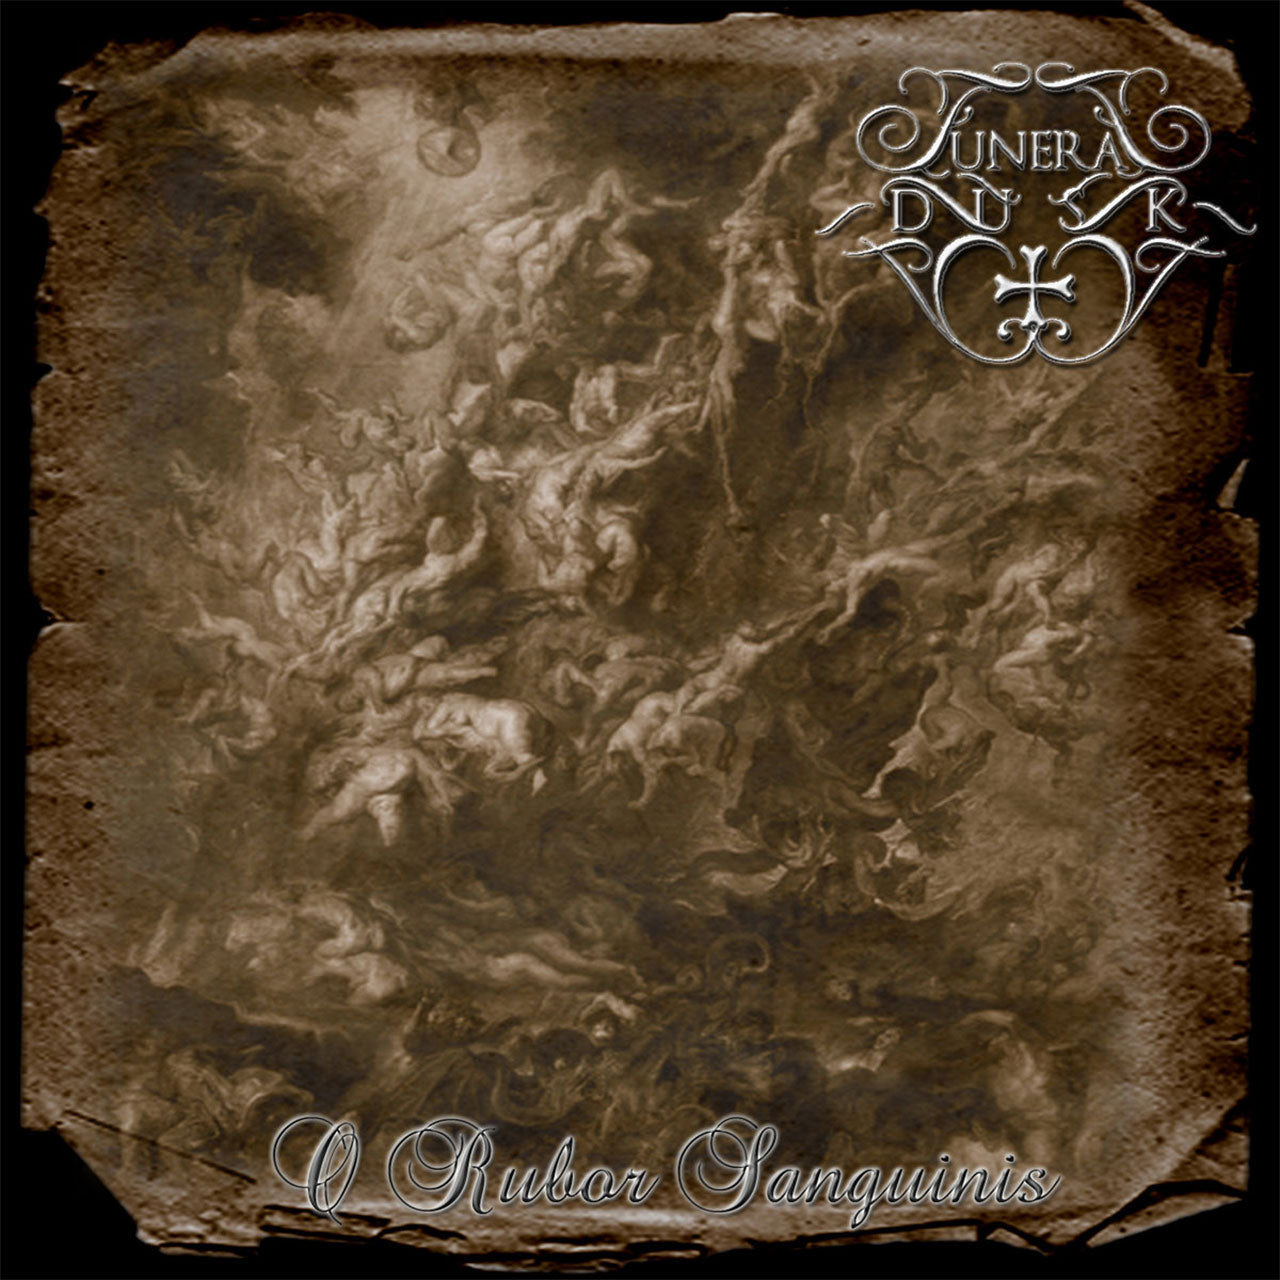 Funeral Dusk - O Rubor Sanguinis (CD)